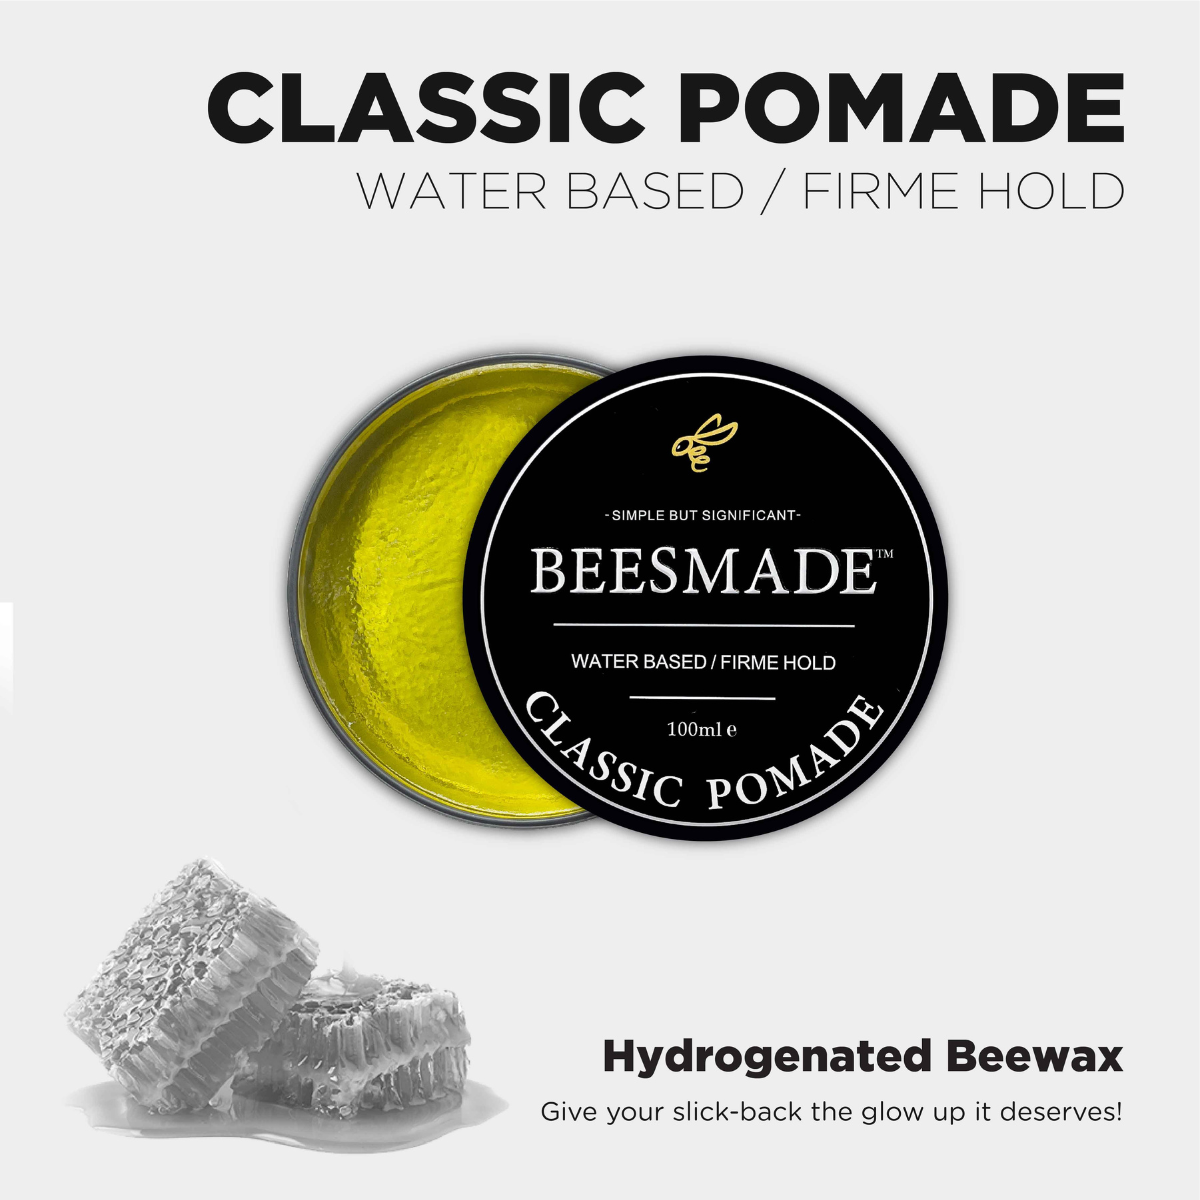 BEESMADE Classic Pomade - No.1 Pomade in Singapore & Malaysia